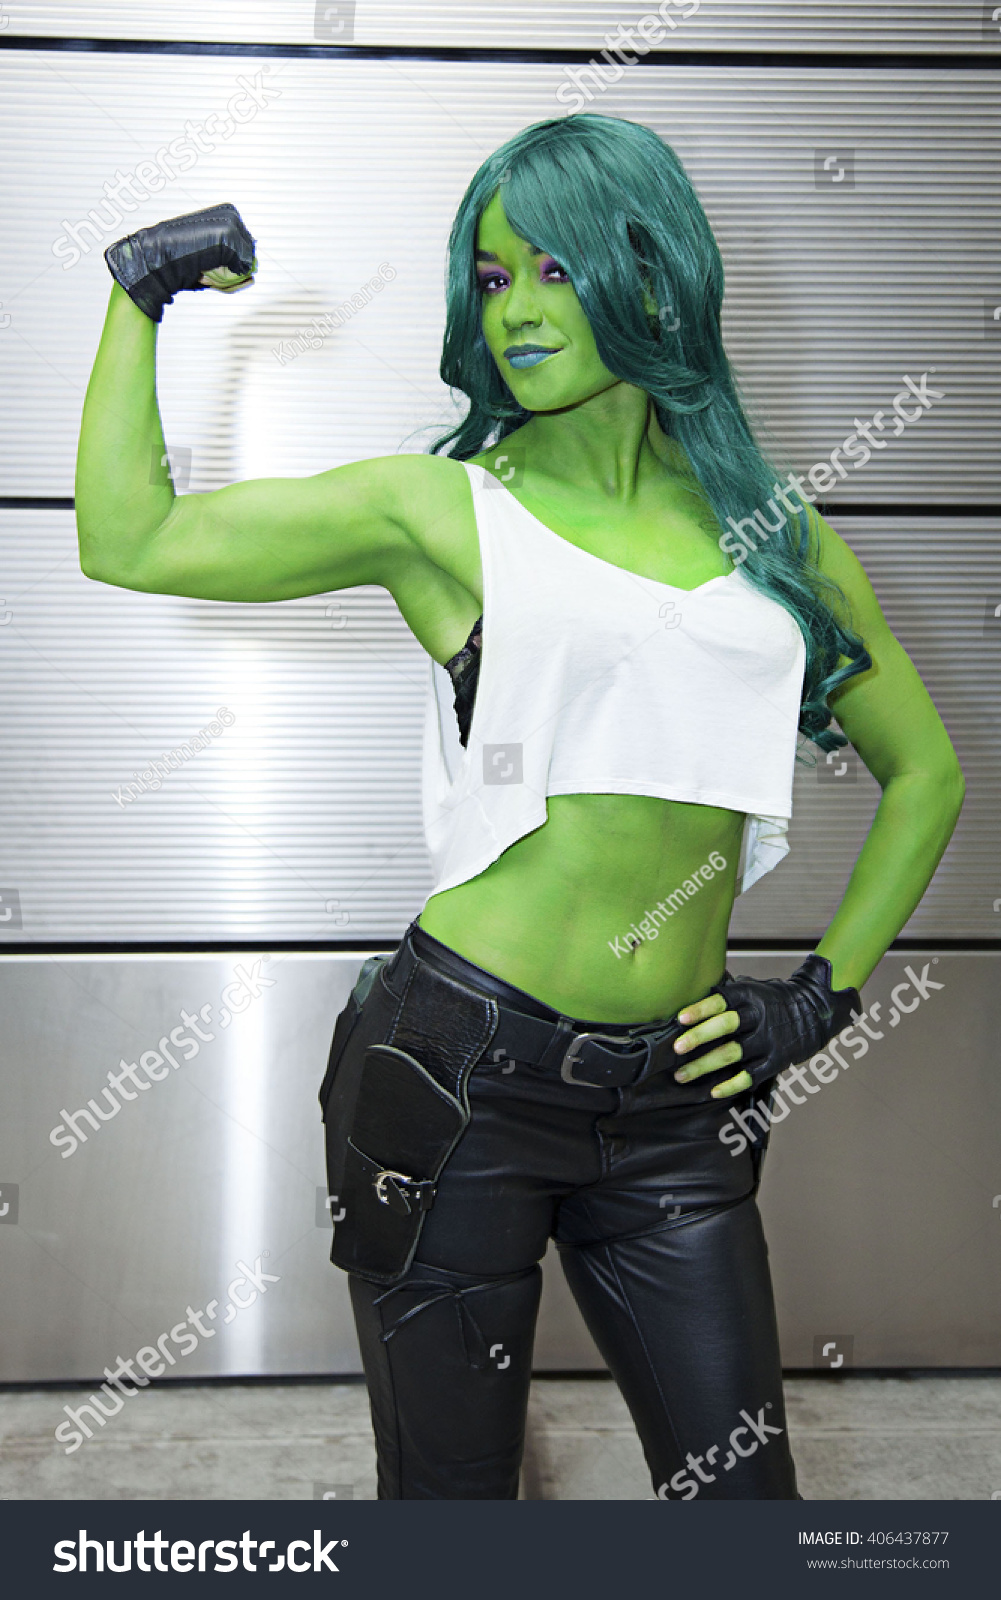 Facts About  She-Hulk.